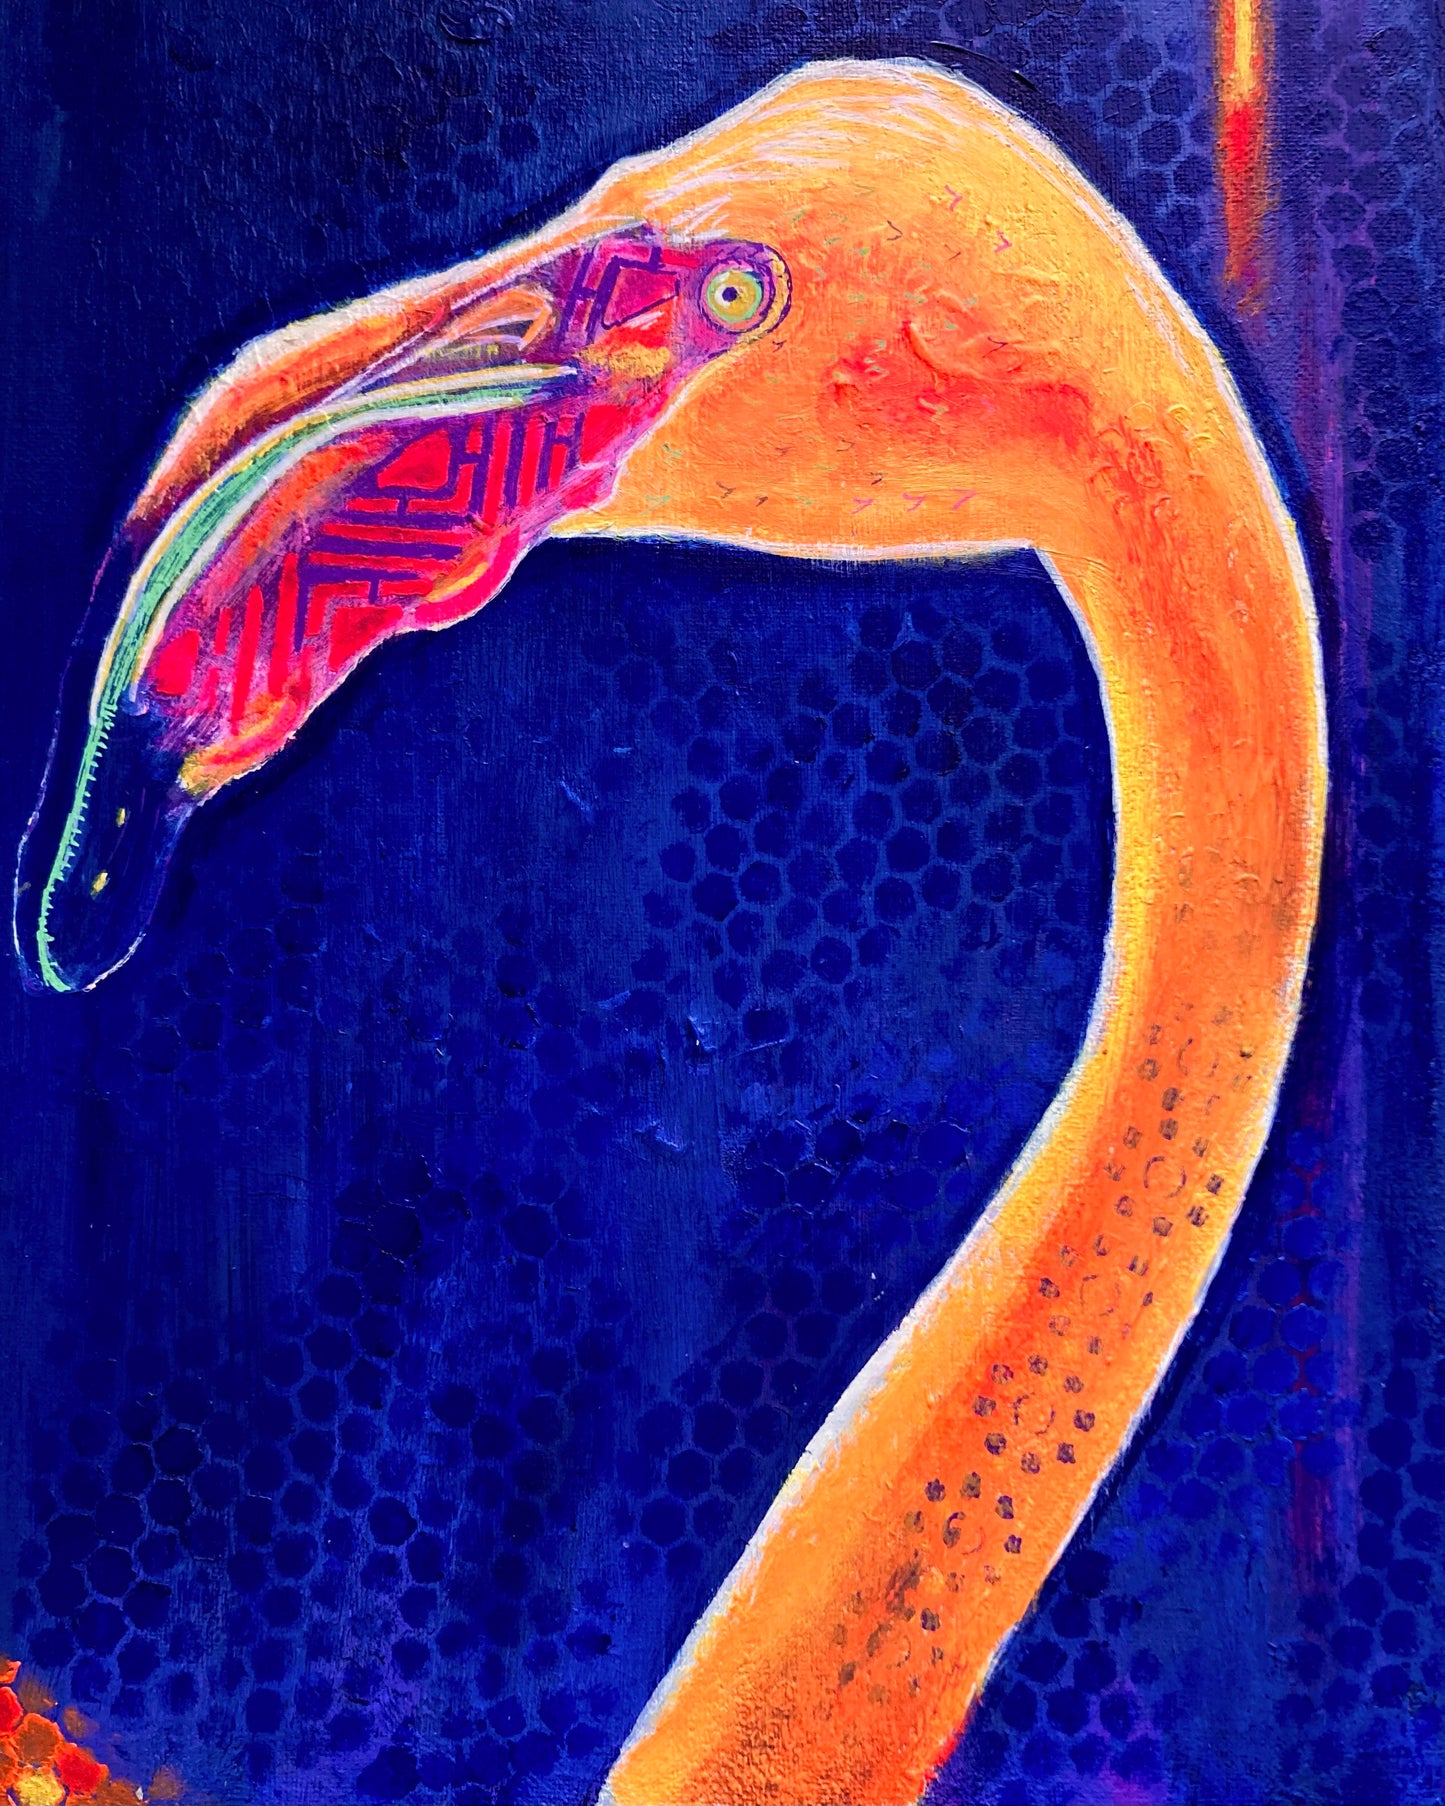 “Flamingo” -Acrylic on 11” x 14” canvas